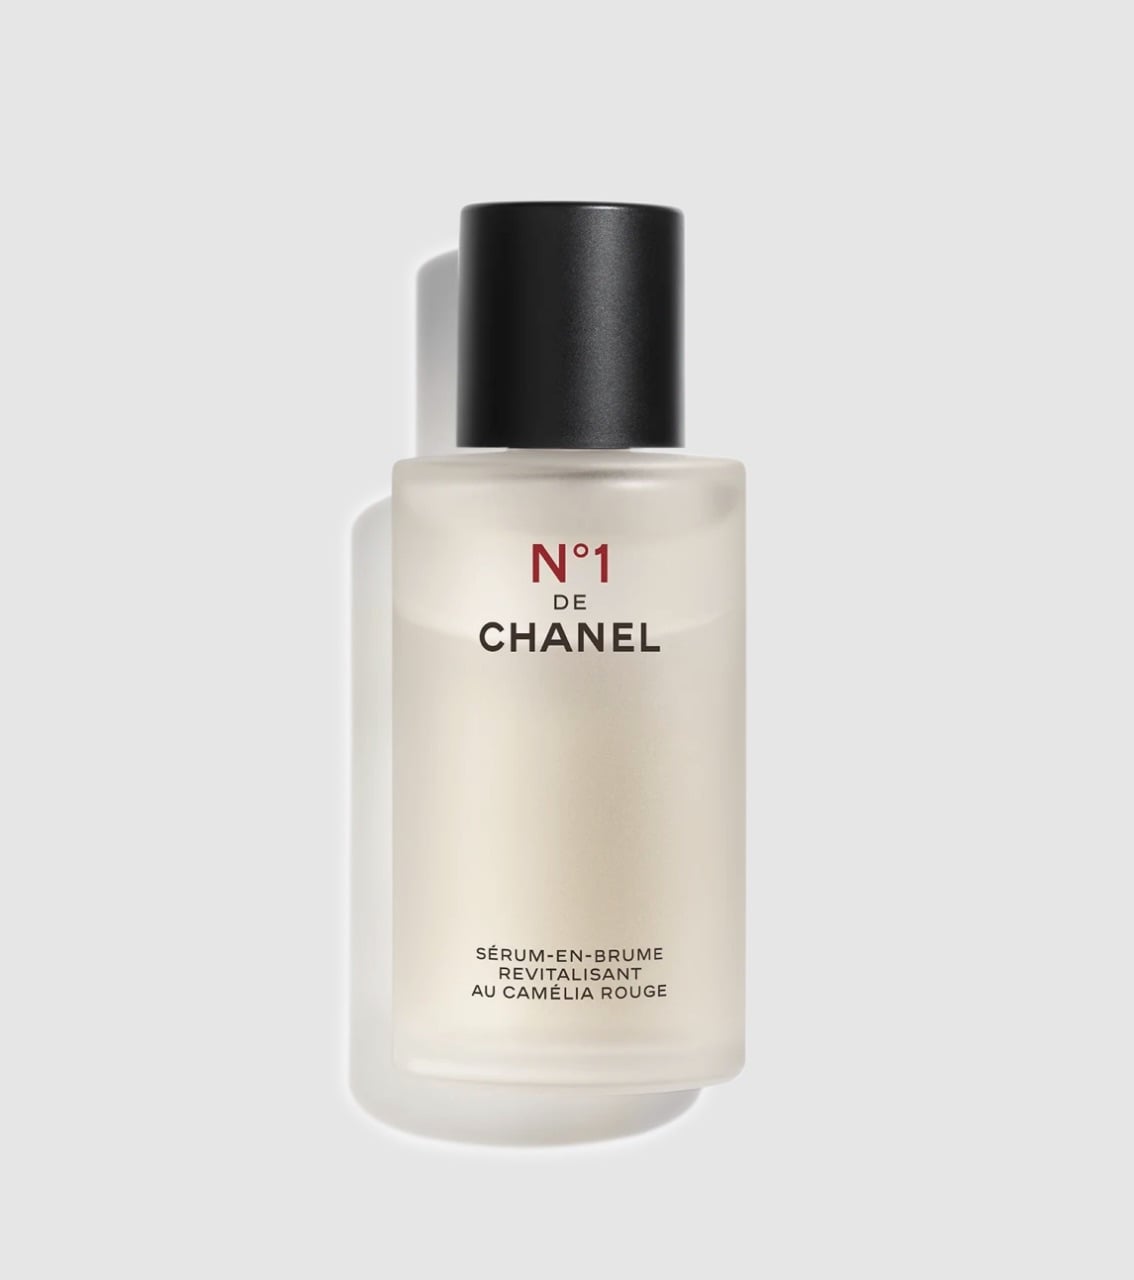 Chanel No. 1 de Chanel Lip & Cheek Balms for Spring 2022